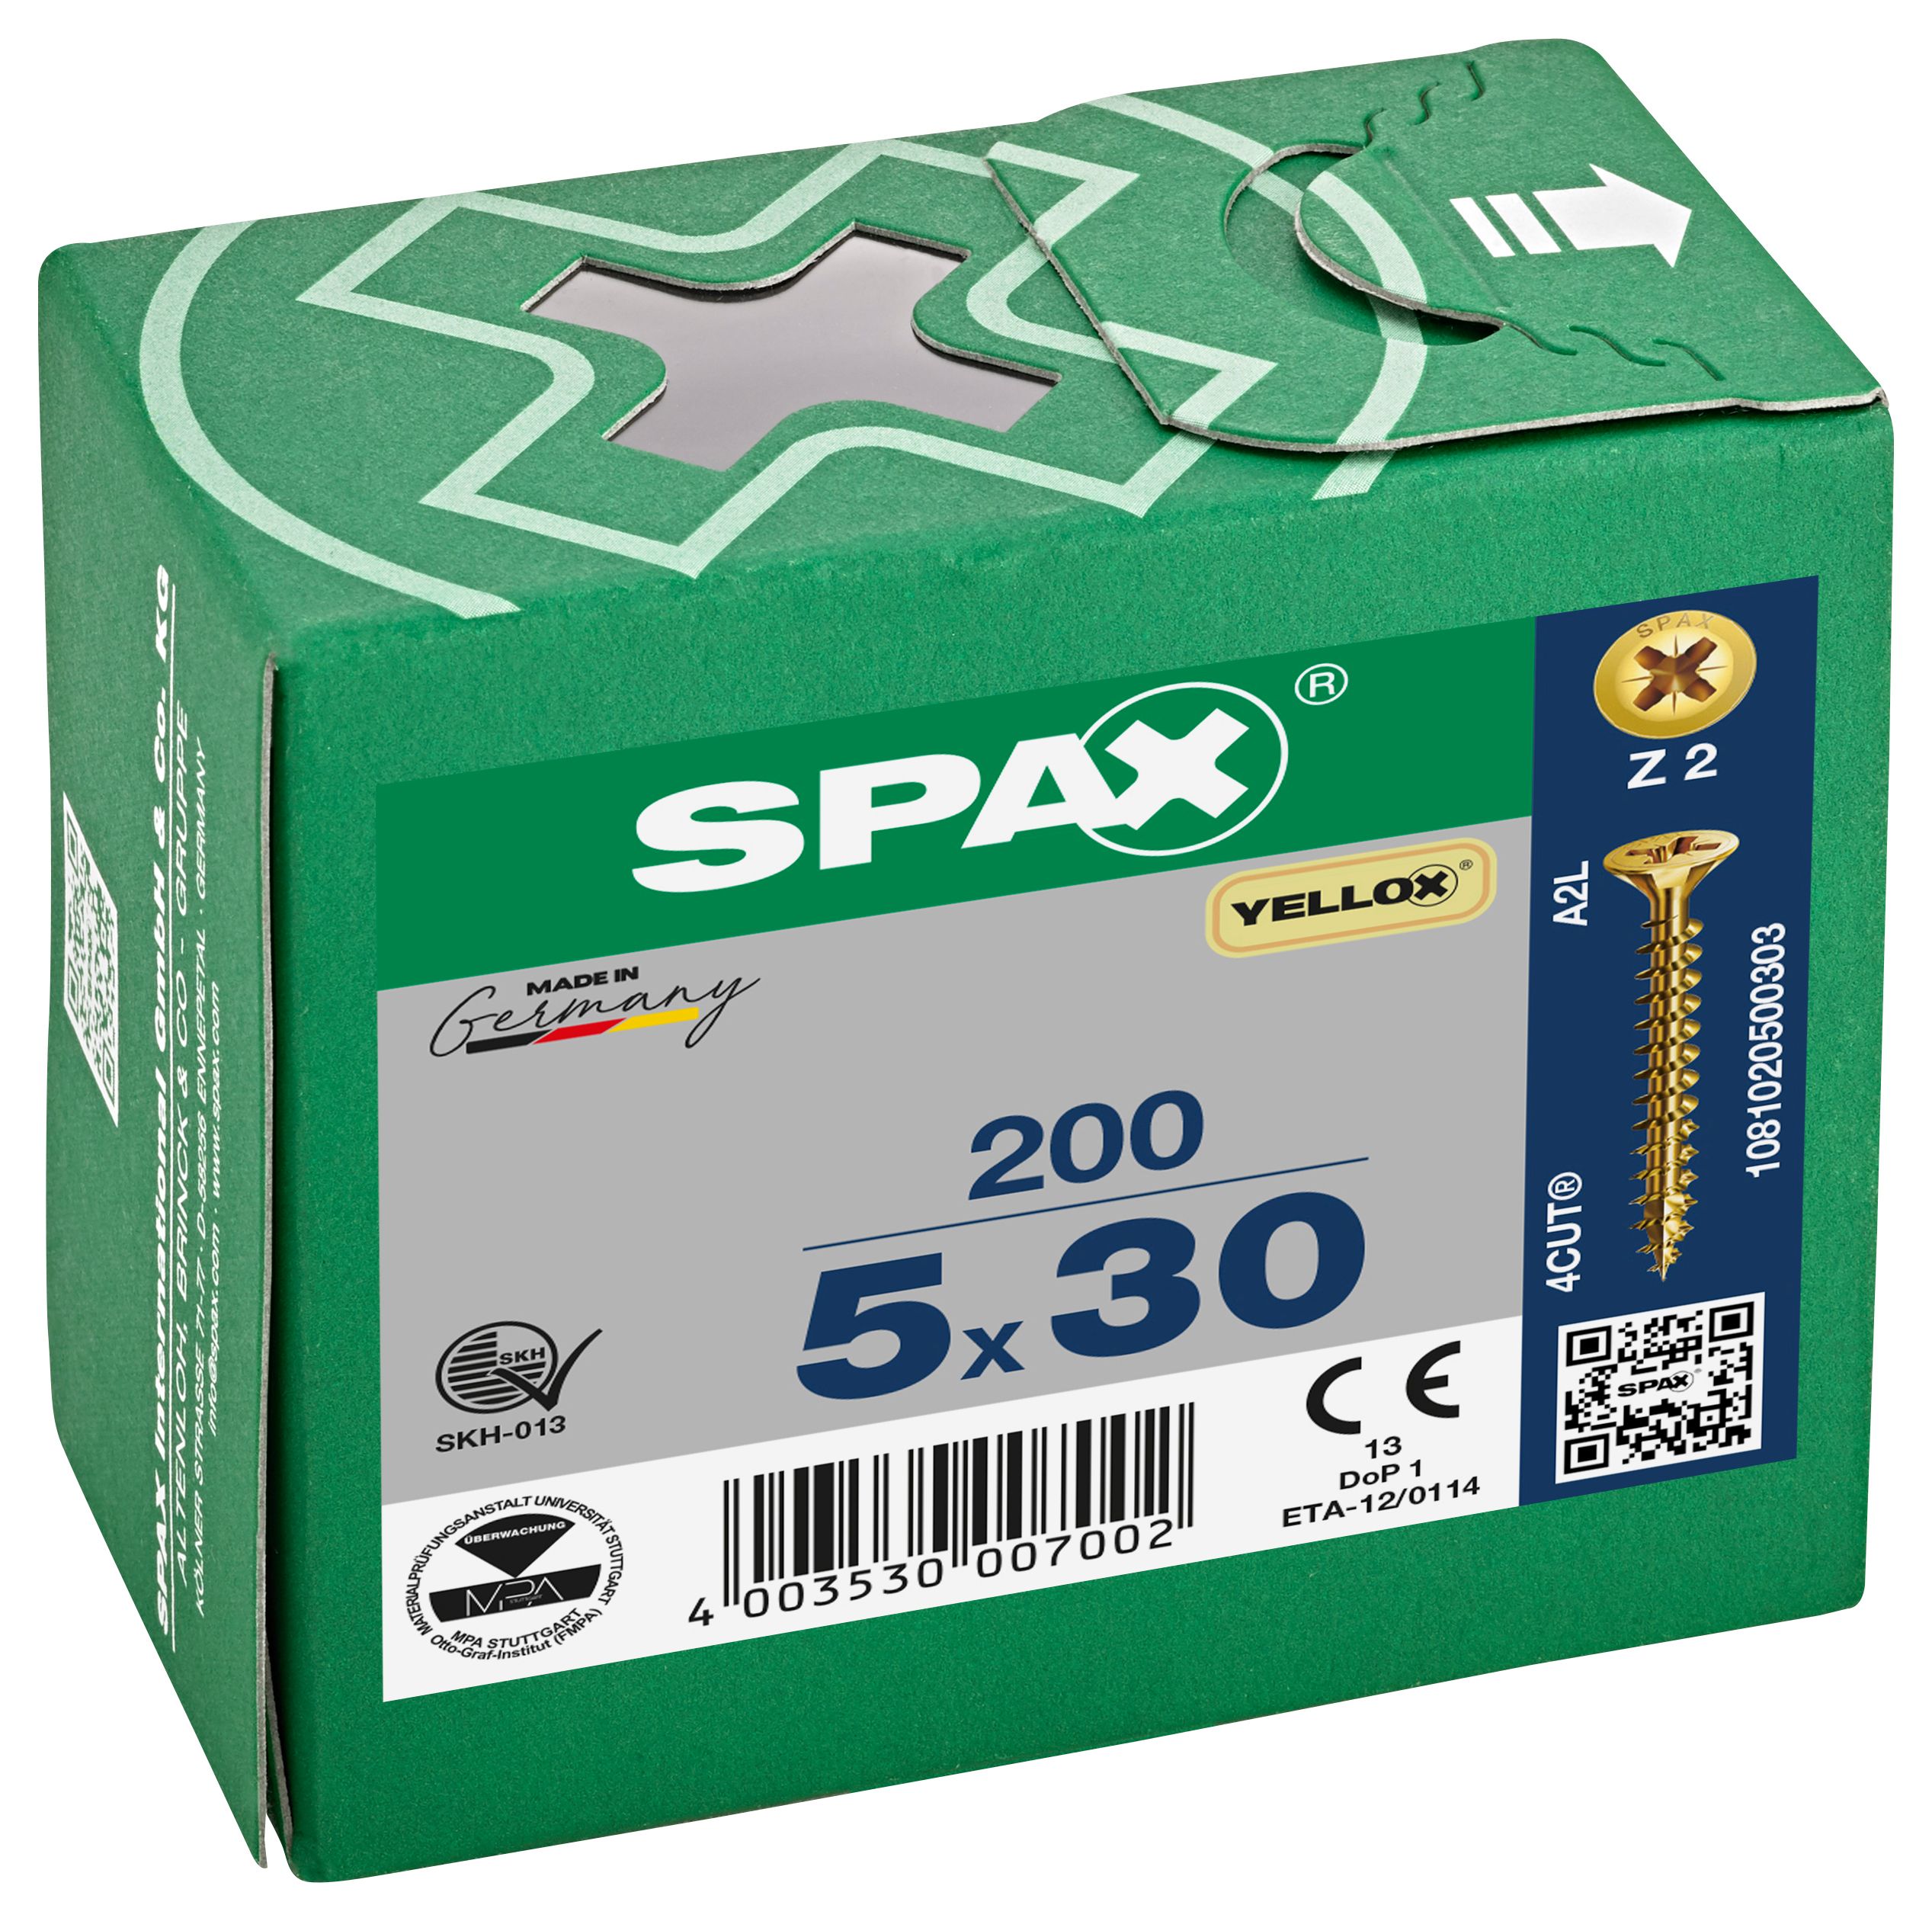 Spax Pz Countersunk Yellox Screws - 5x30mm Pack Of 200